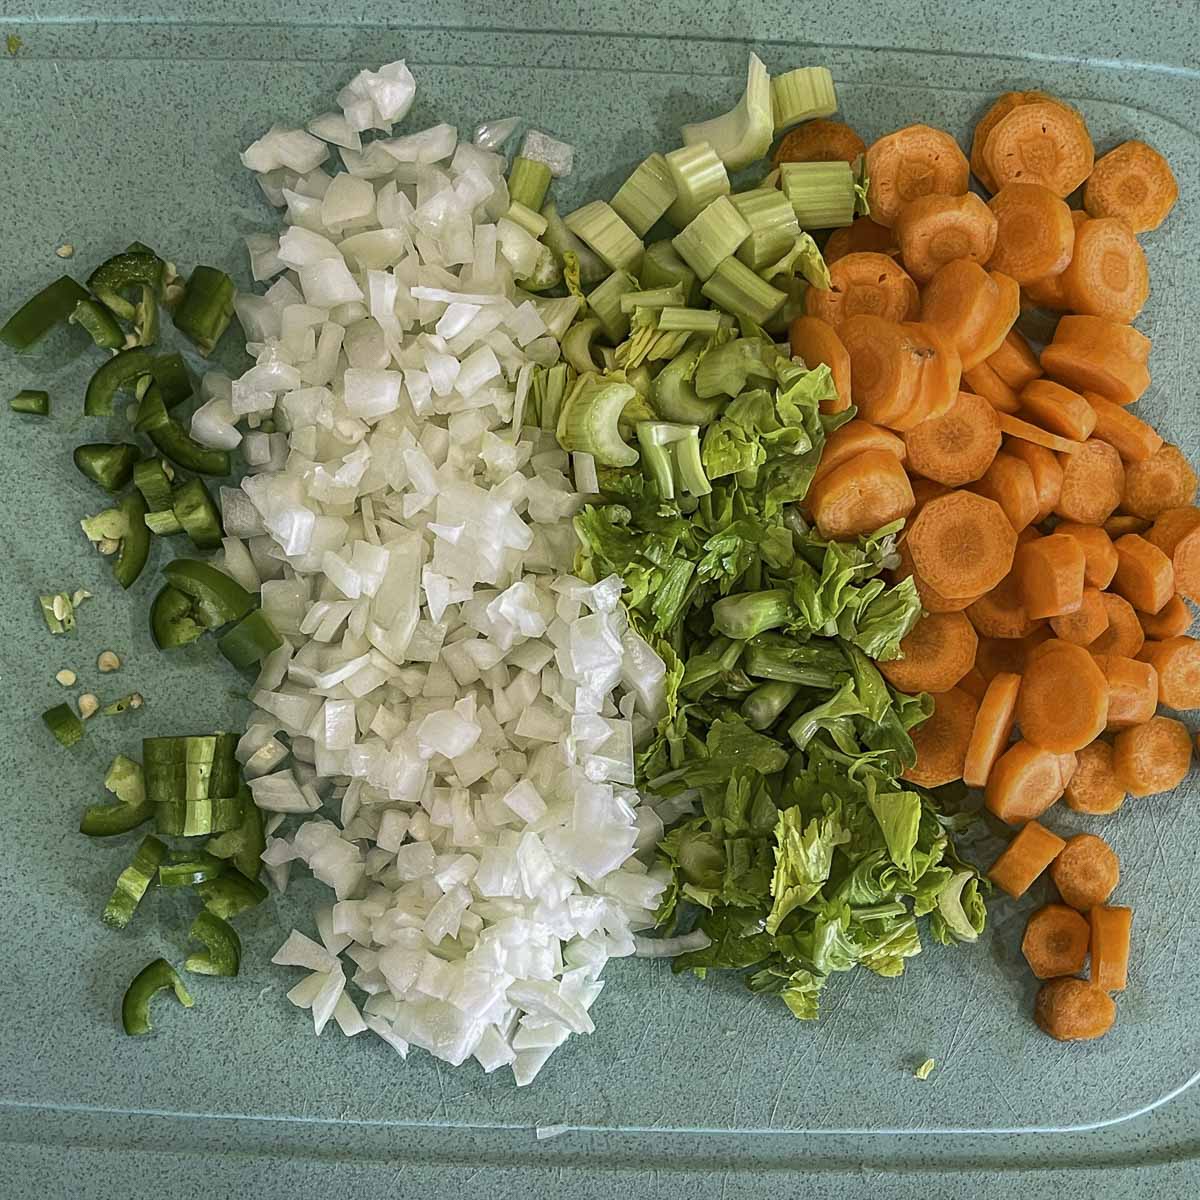 diced veggies on a cutting board